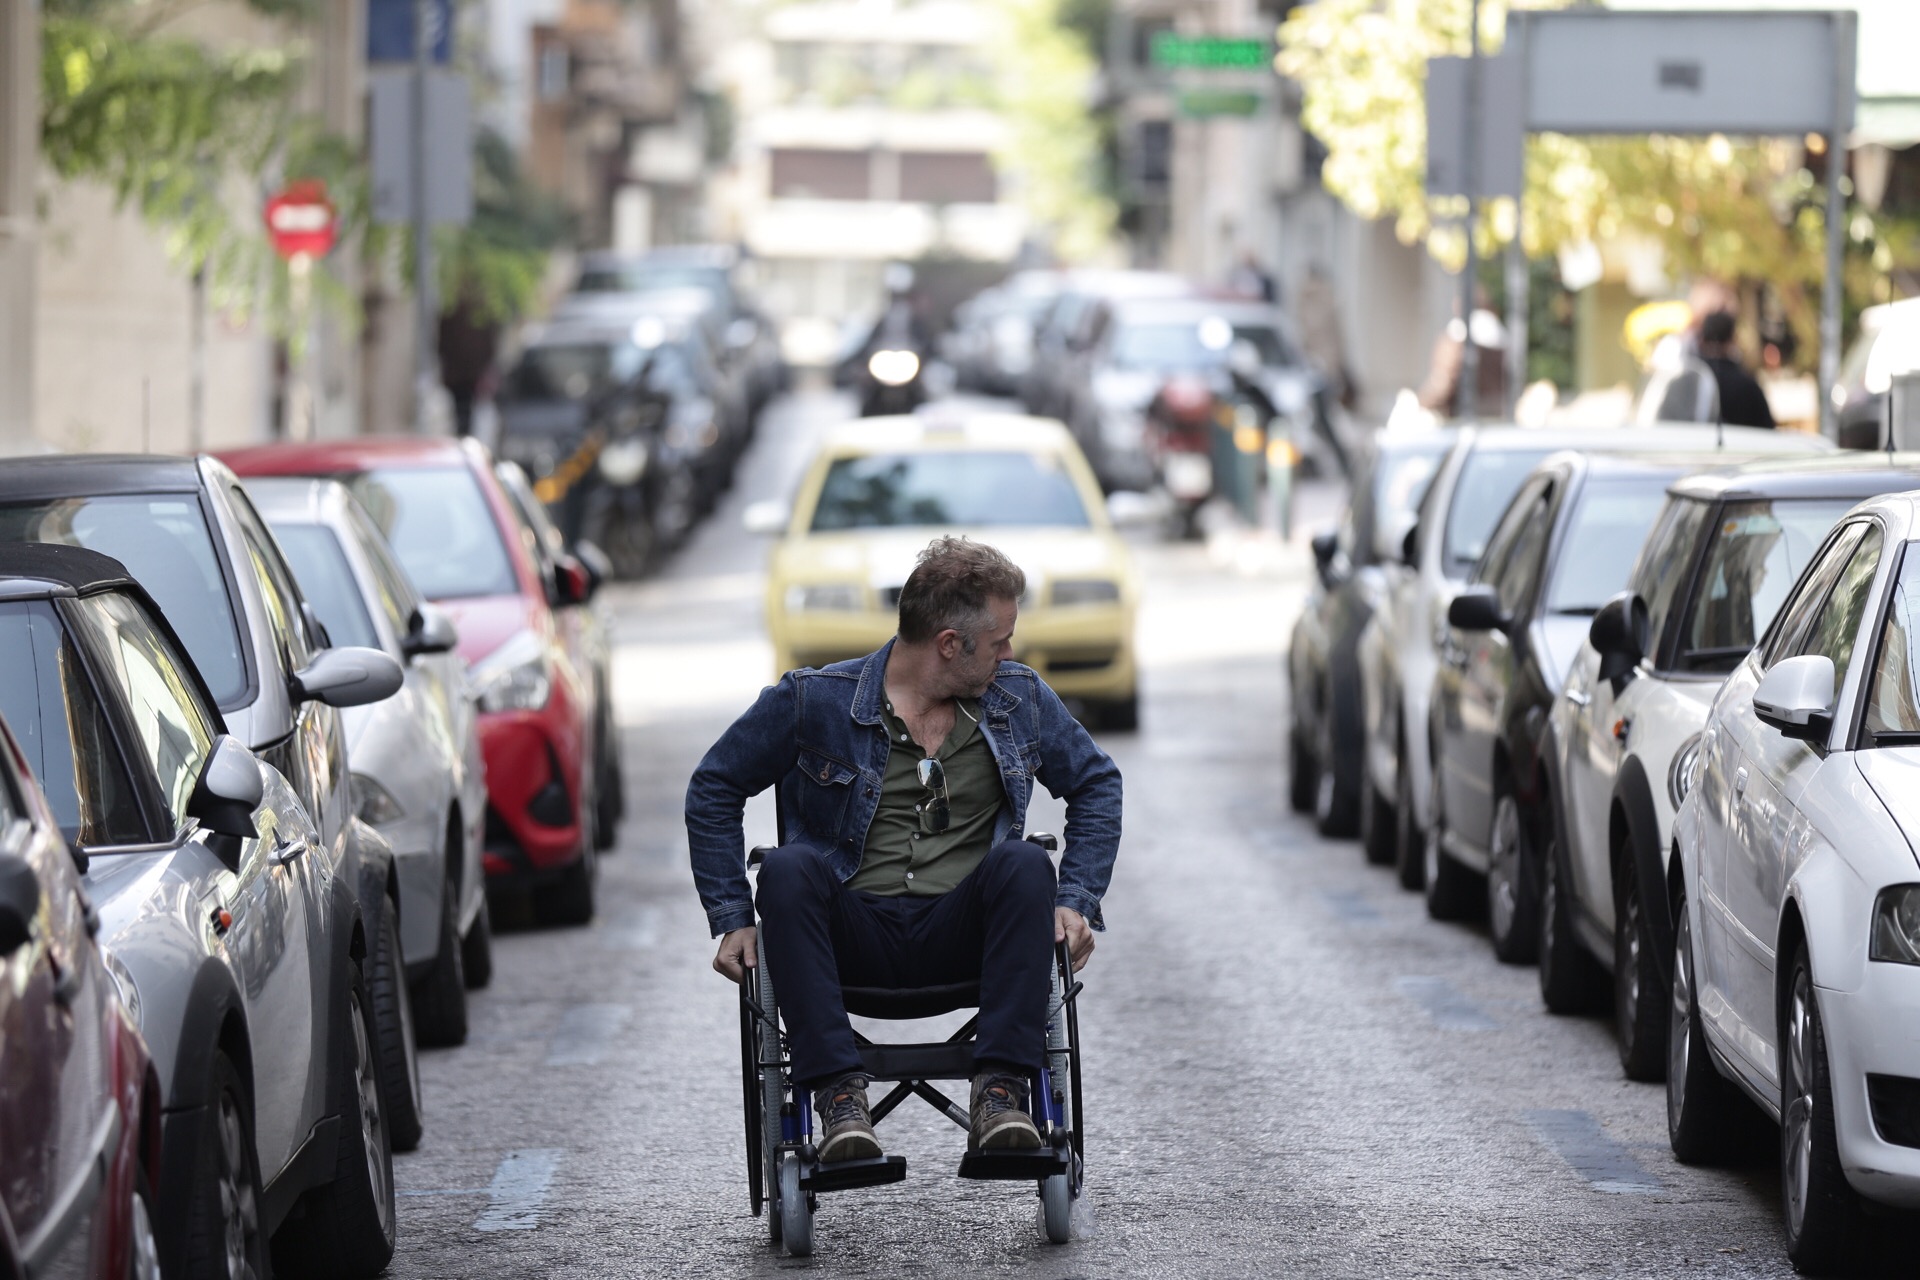 O ηθοποιός Χρήστος Λούλης σε αναπηρικό καροτσάκι γυρίζει την Αθήνα για την καμπάνια του “Ποταμιού”